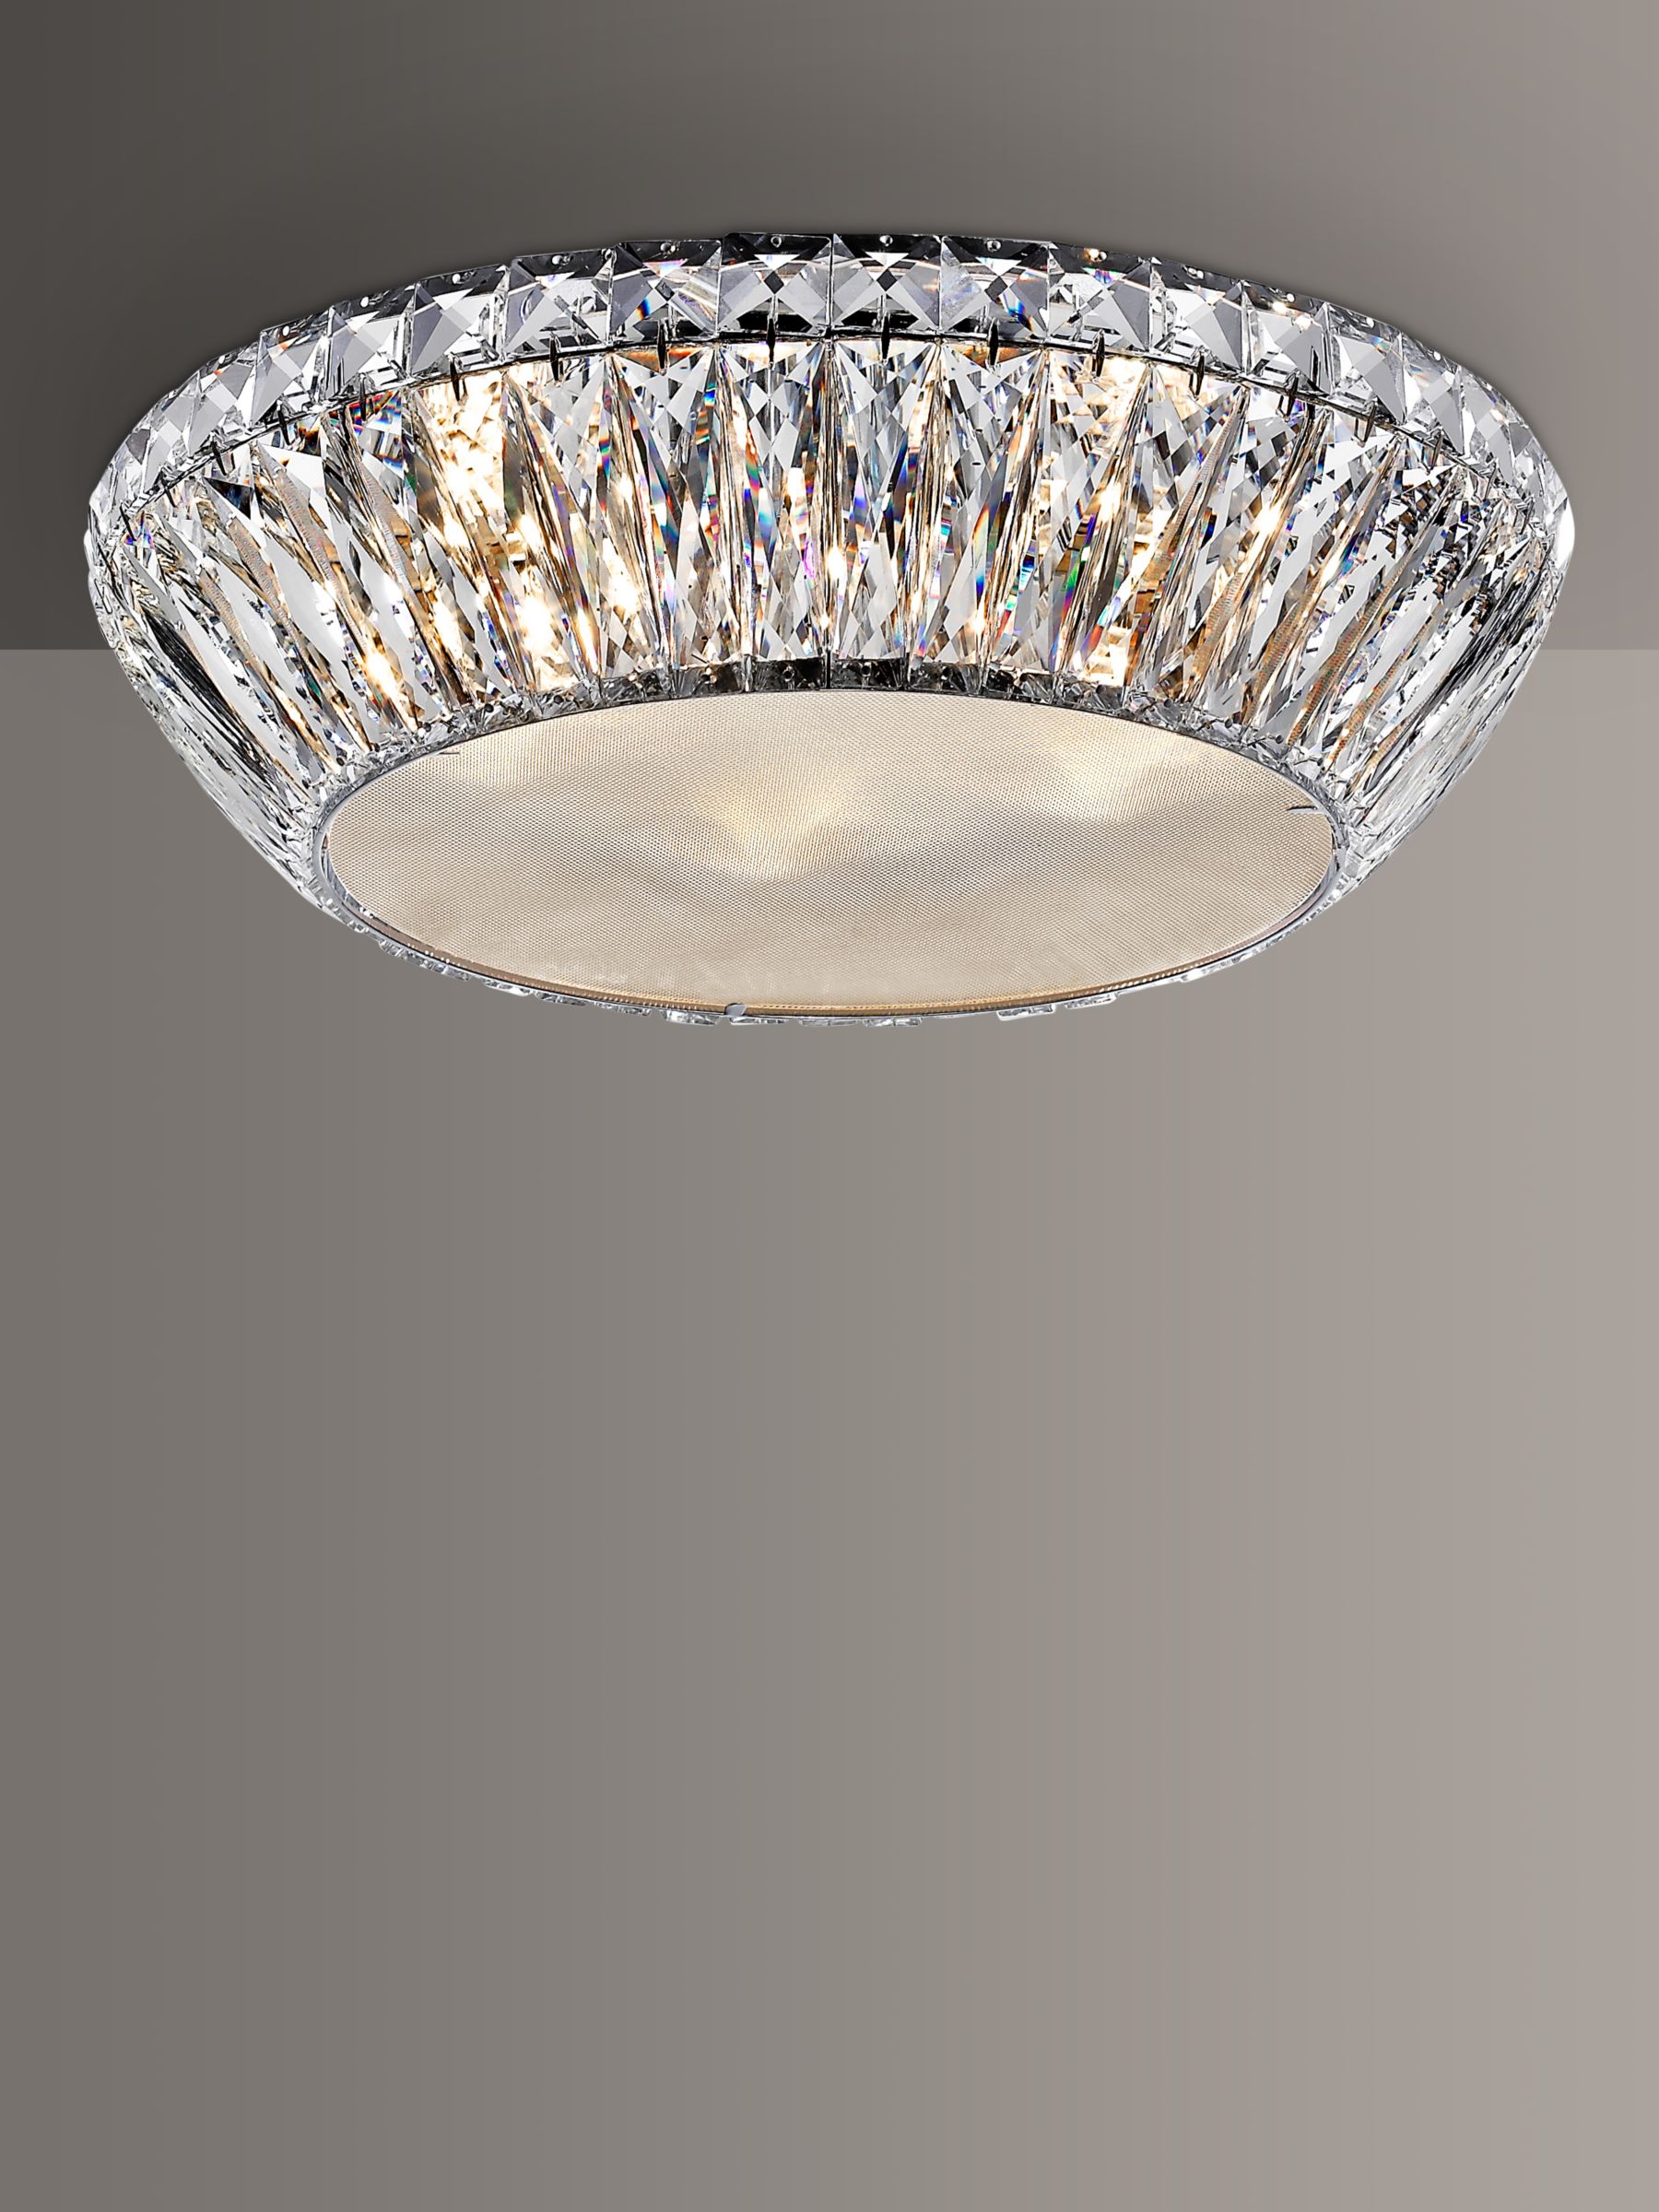 Photo of Impex armel led crystal semi flush small ceiling light clear/chrome